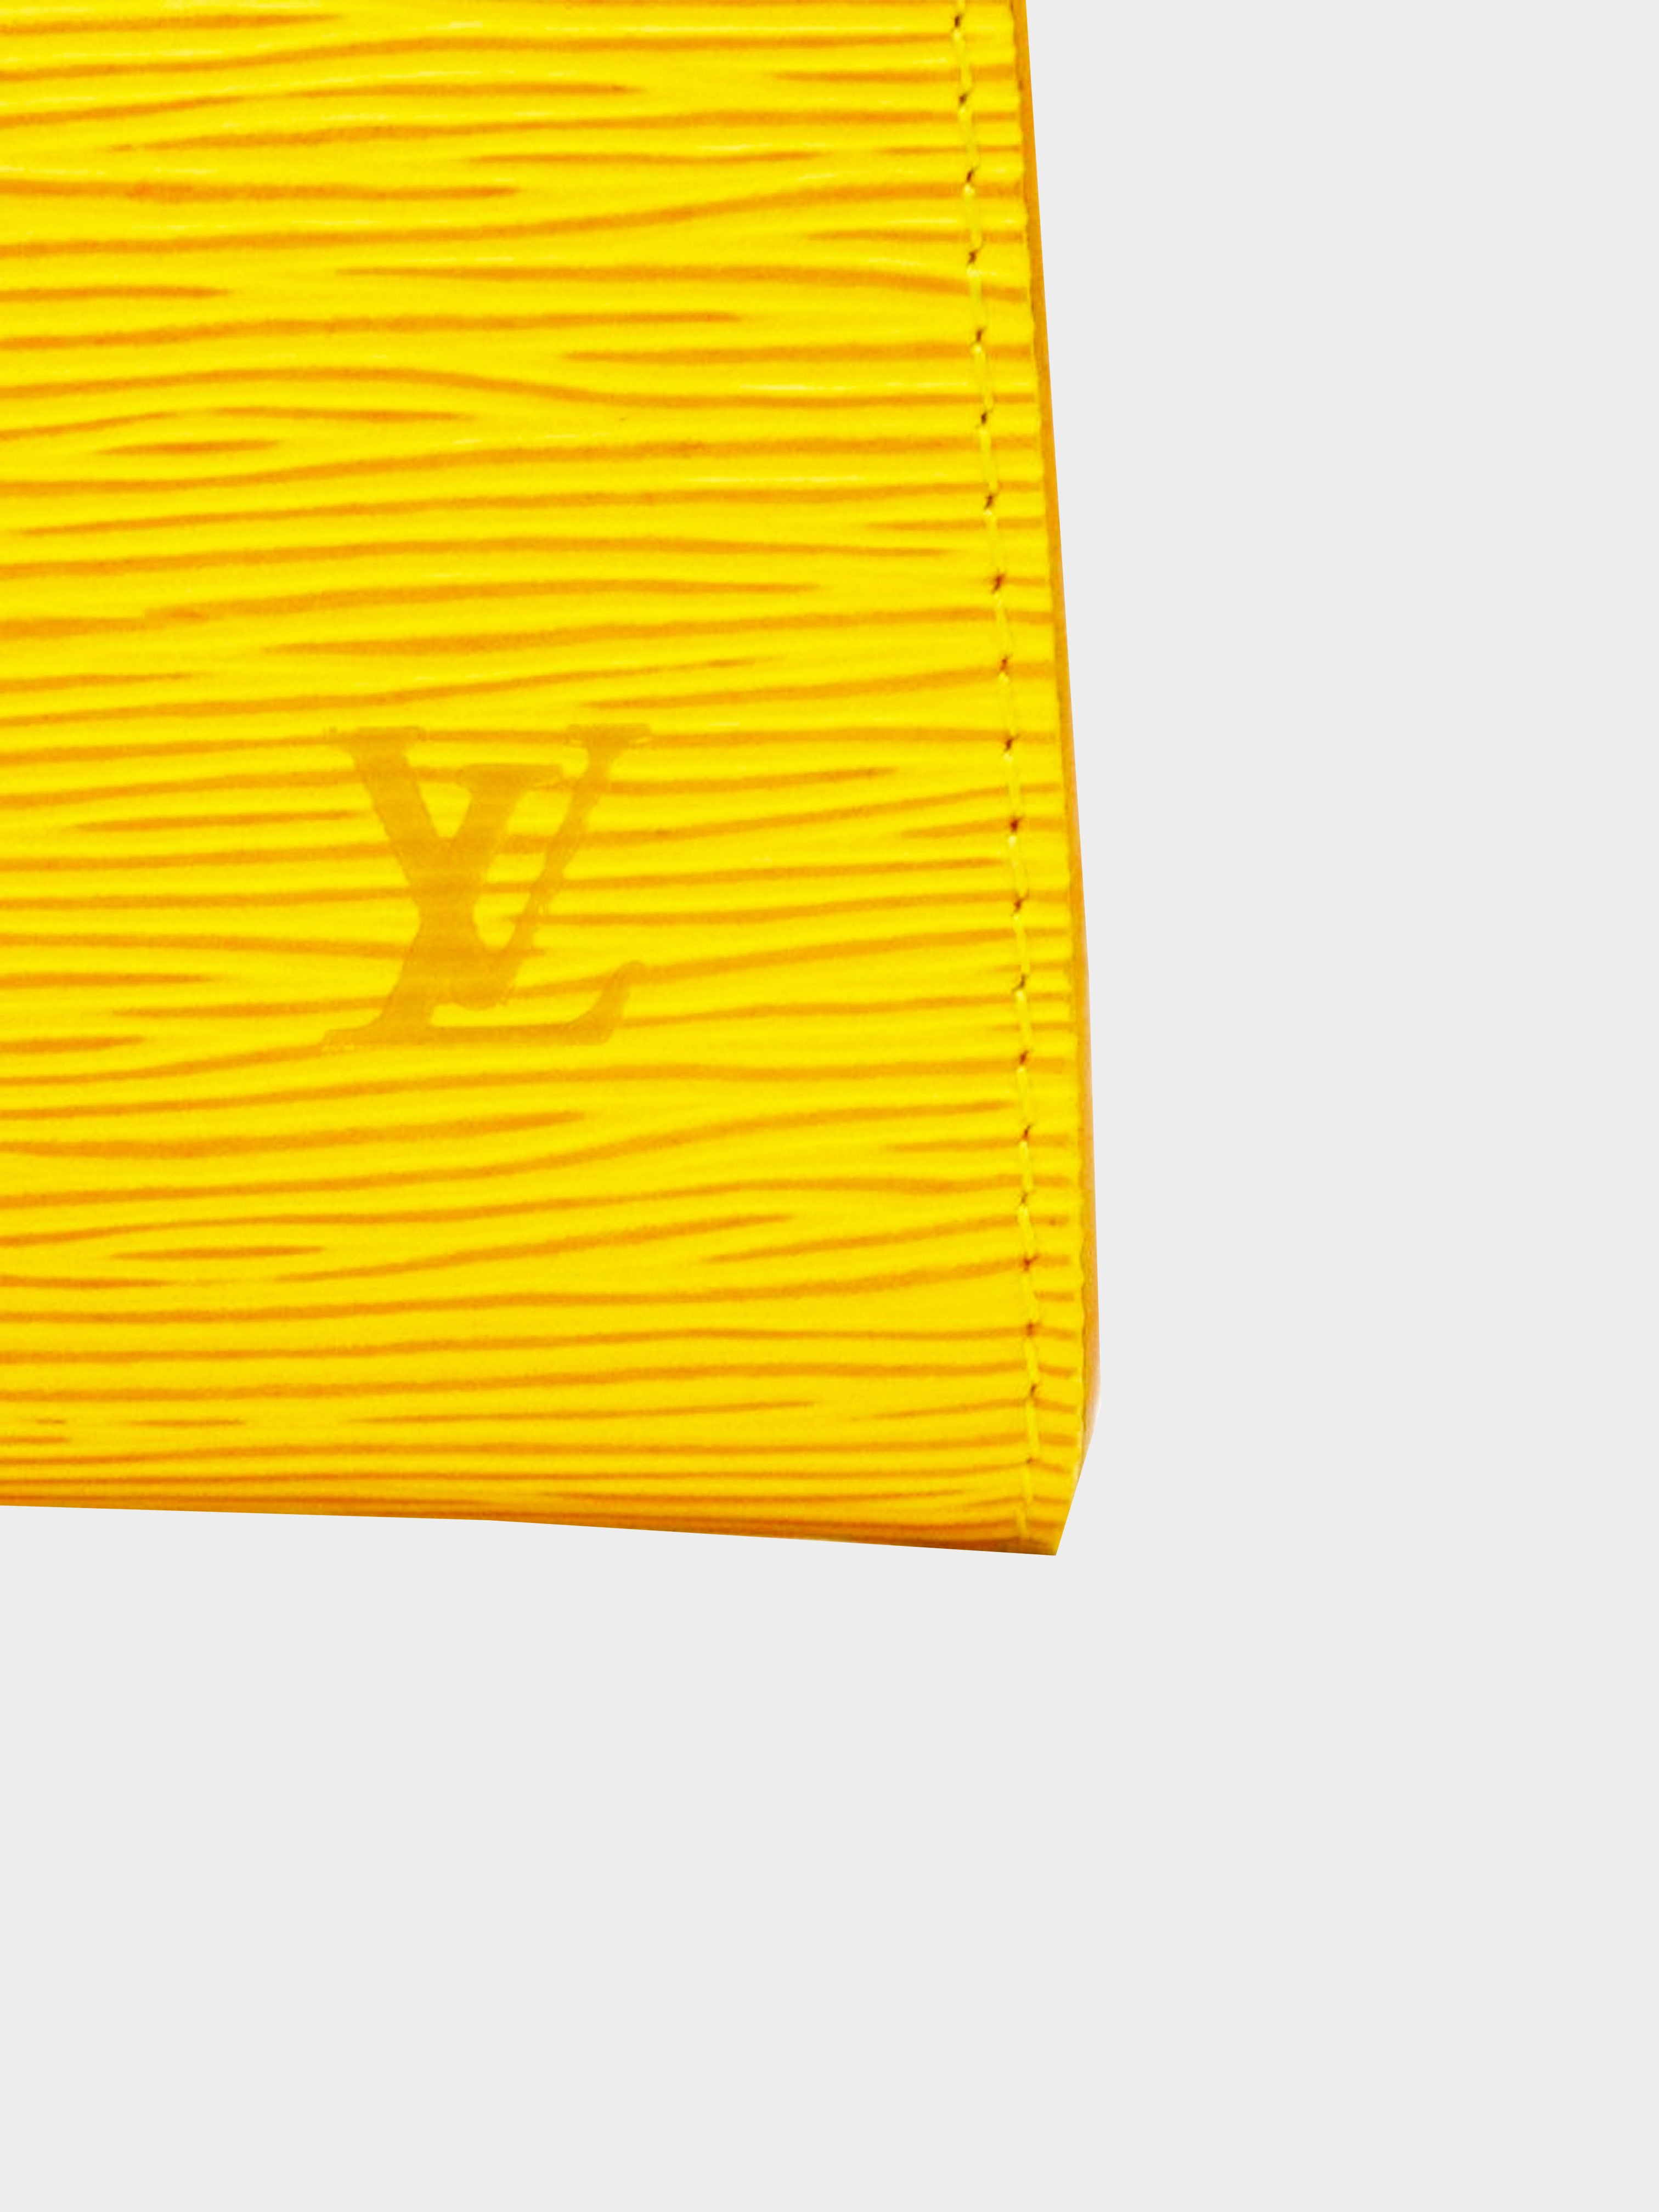 Louis Vuitton Yellow Epi Pochette Accessoires Gold Hardware, 2002